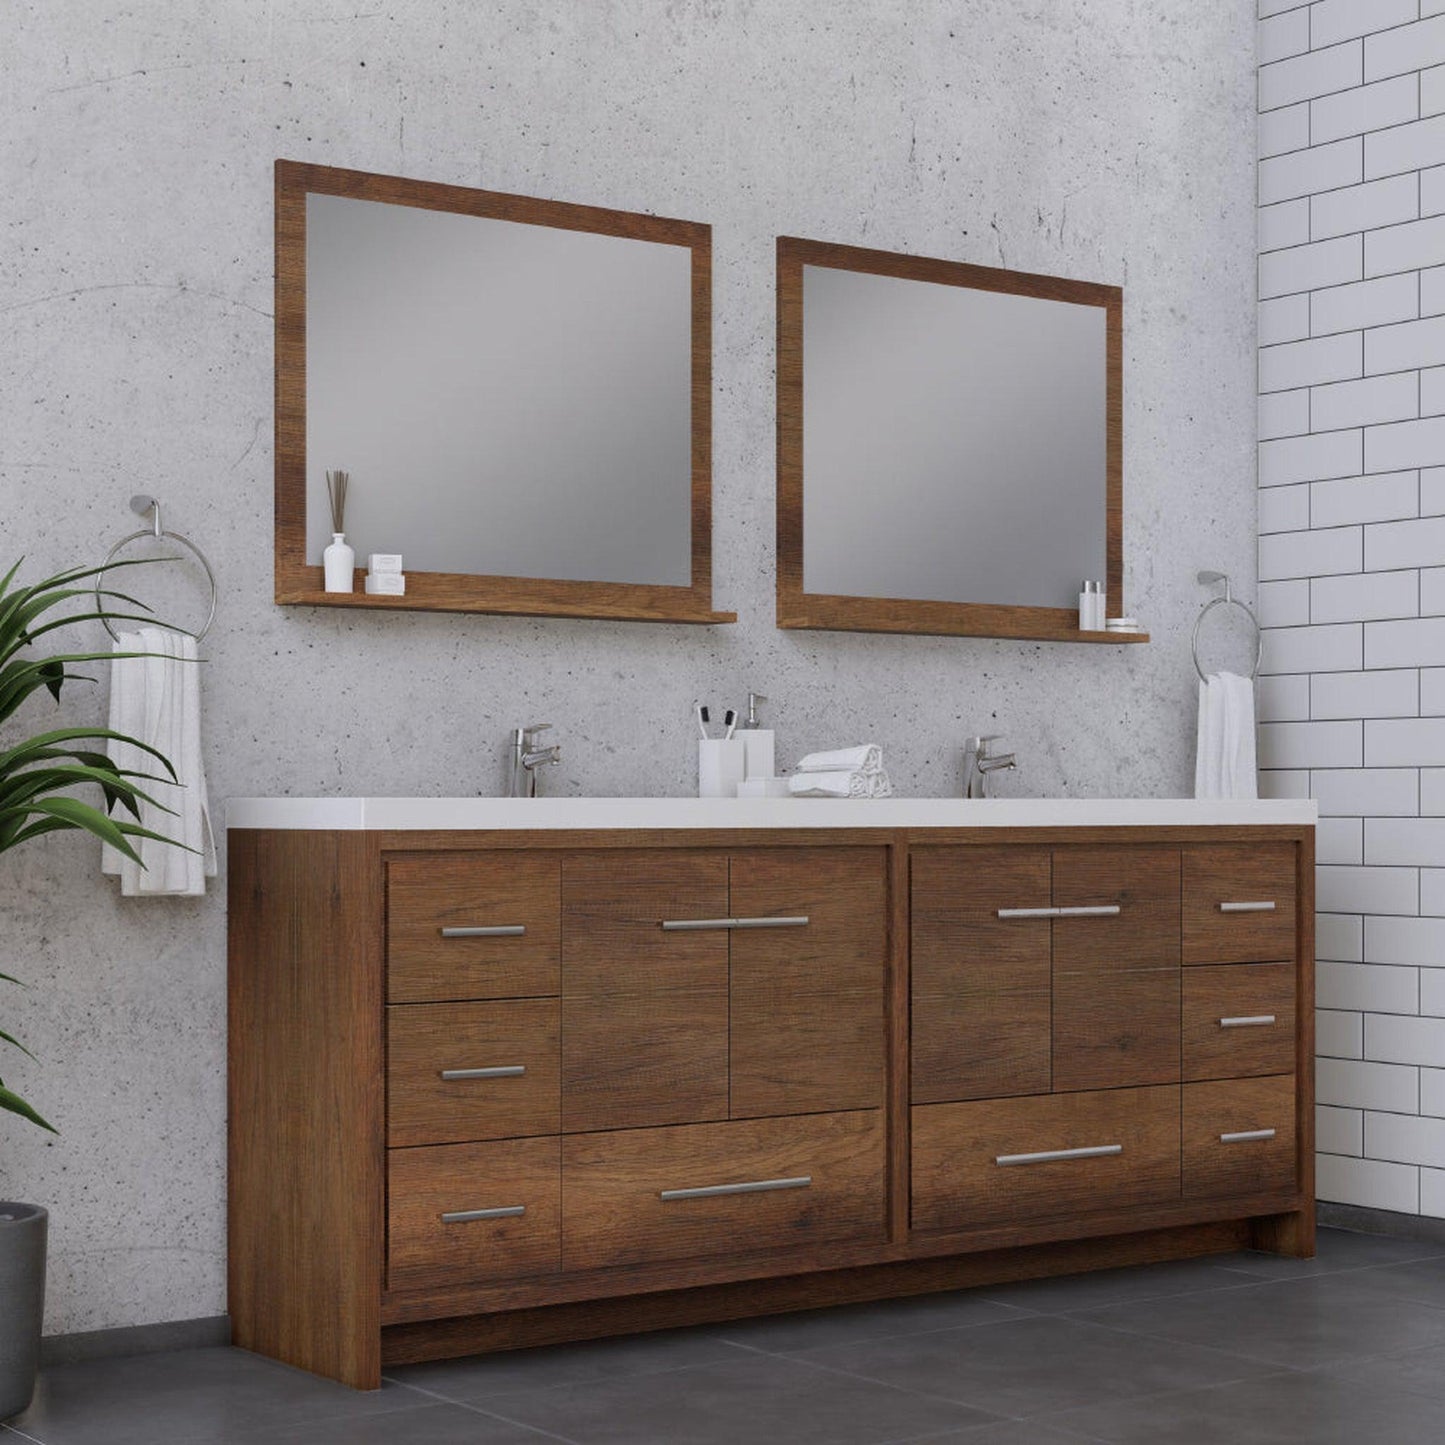 Alya Bath Sortino 84" Double Rosewood Modern Freestanding Bathroom Vanity With Acrylic Top and Integrated Sink